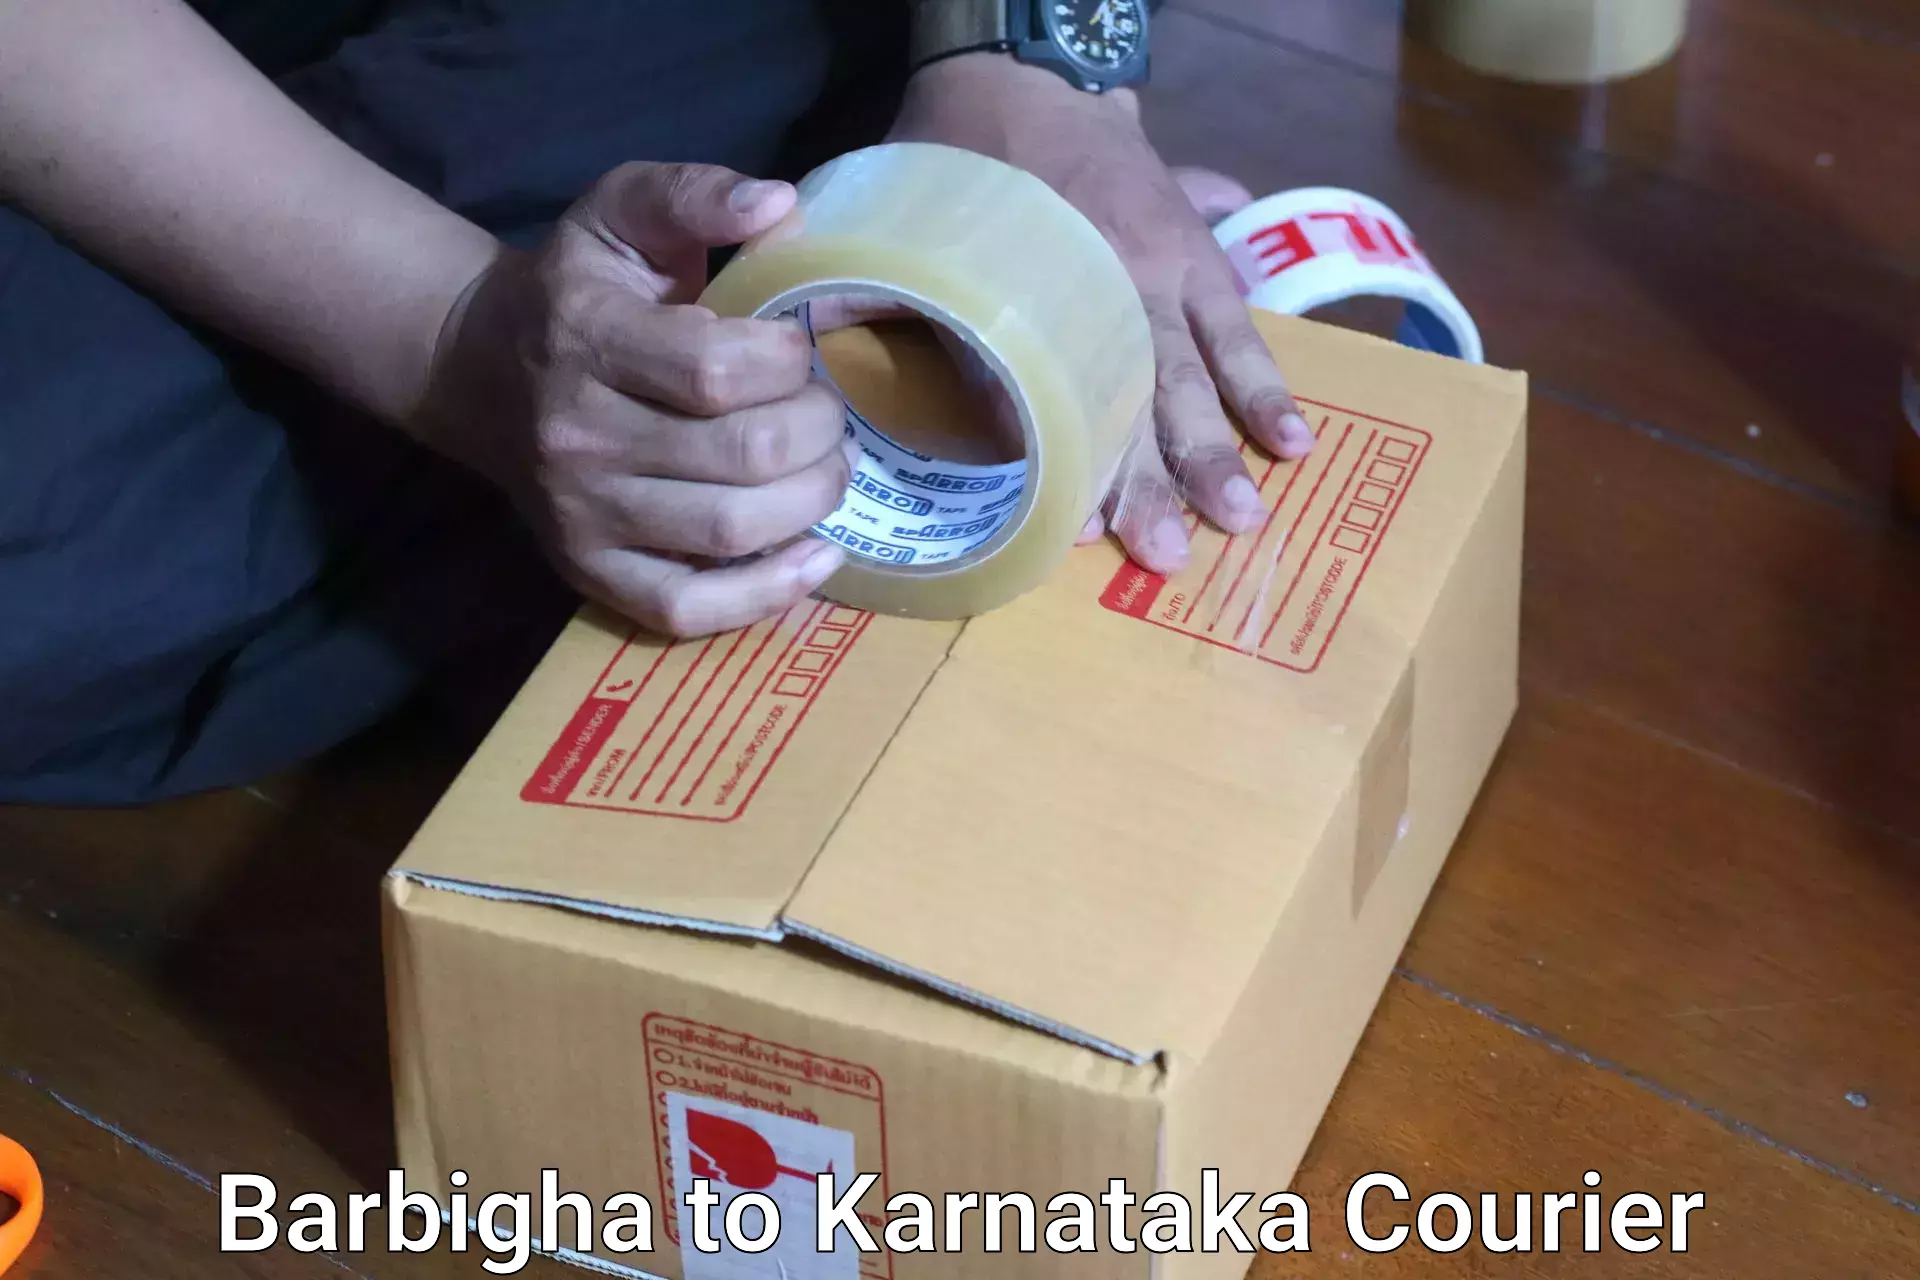 Baggage relocation service Barbigha to Karnataka